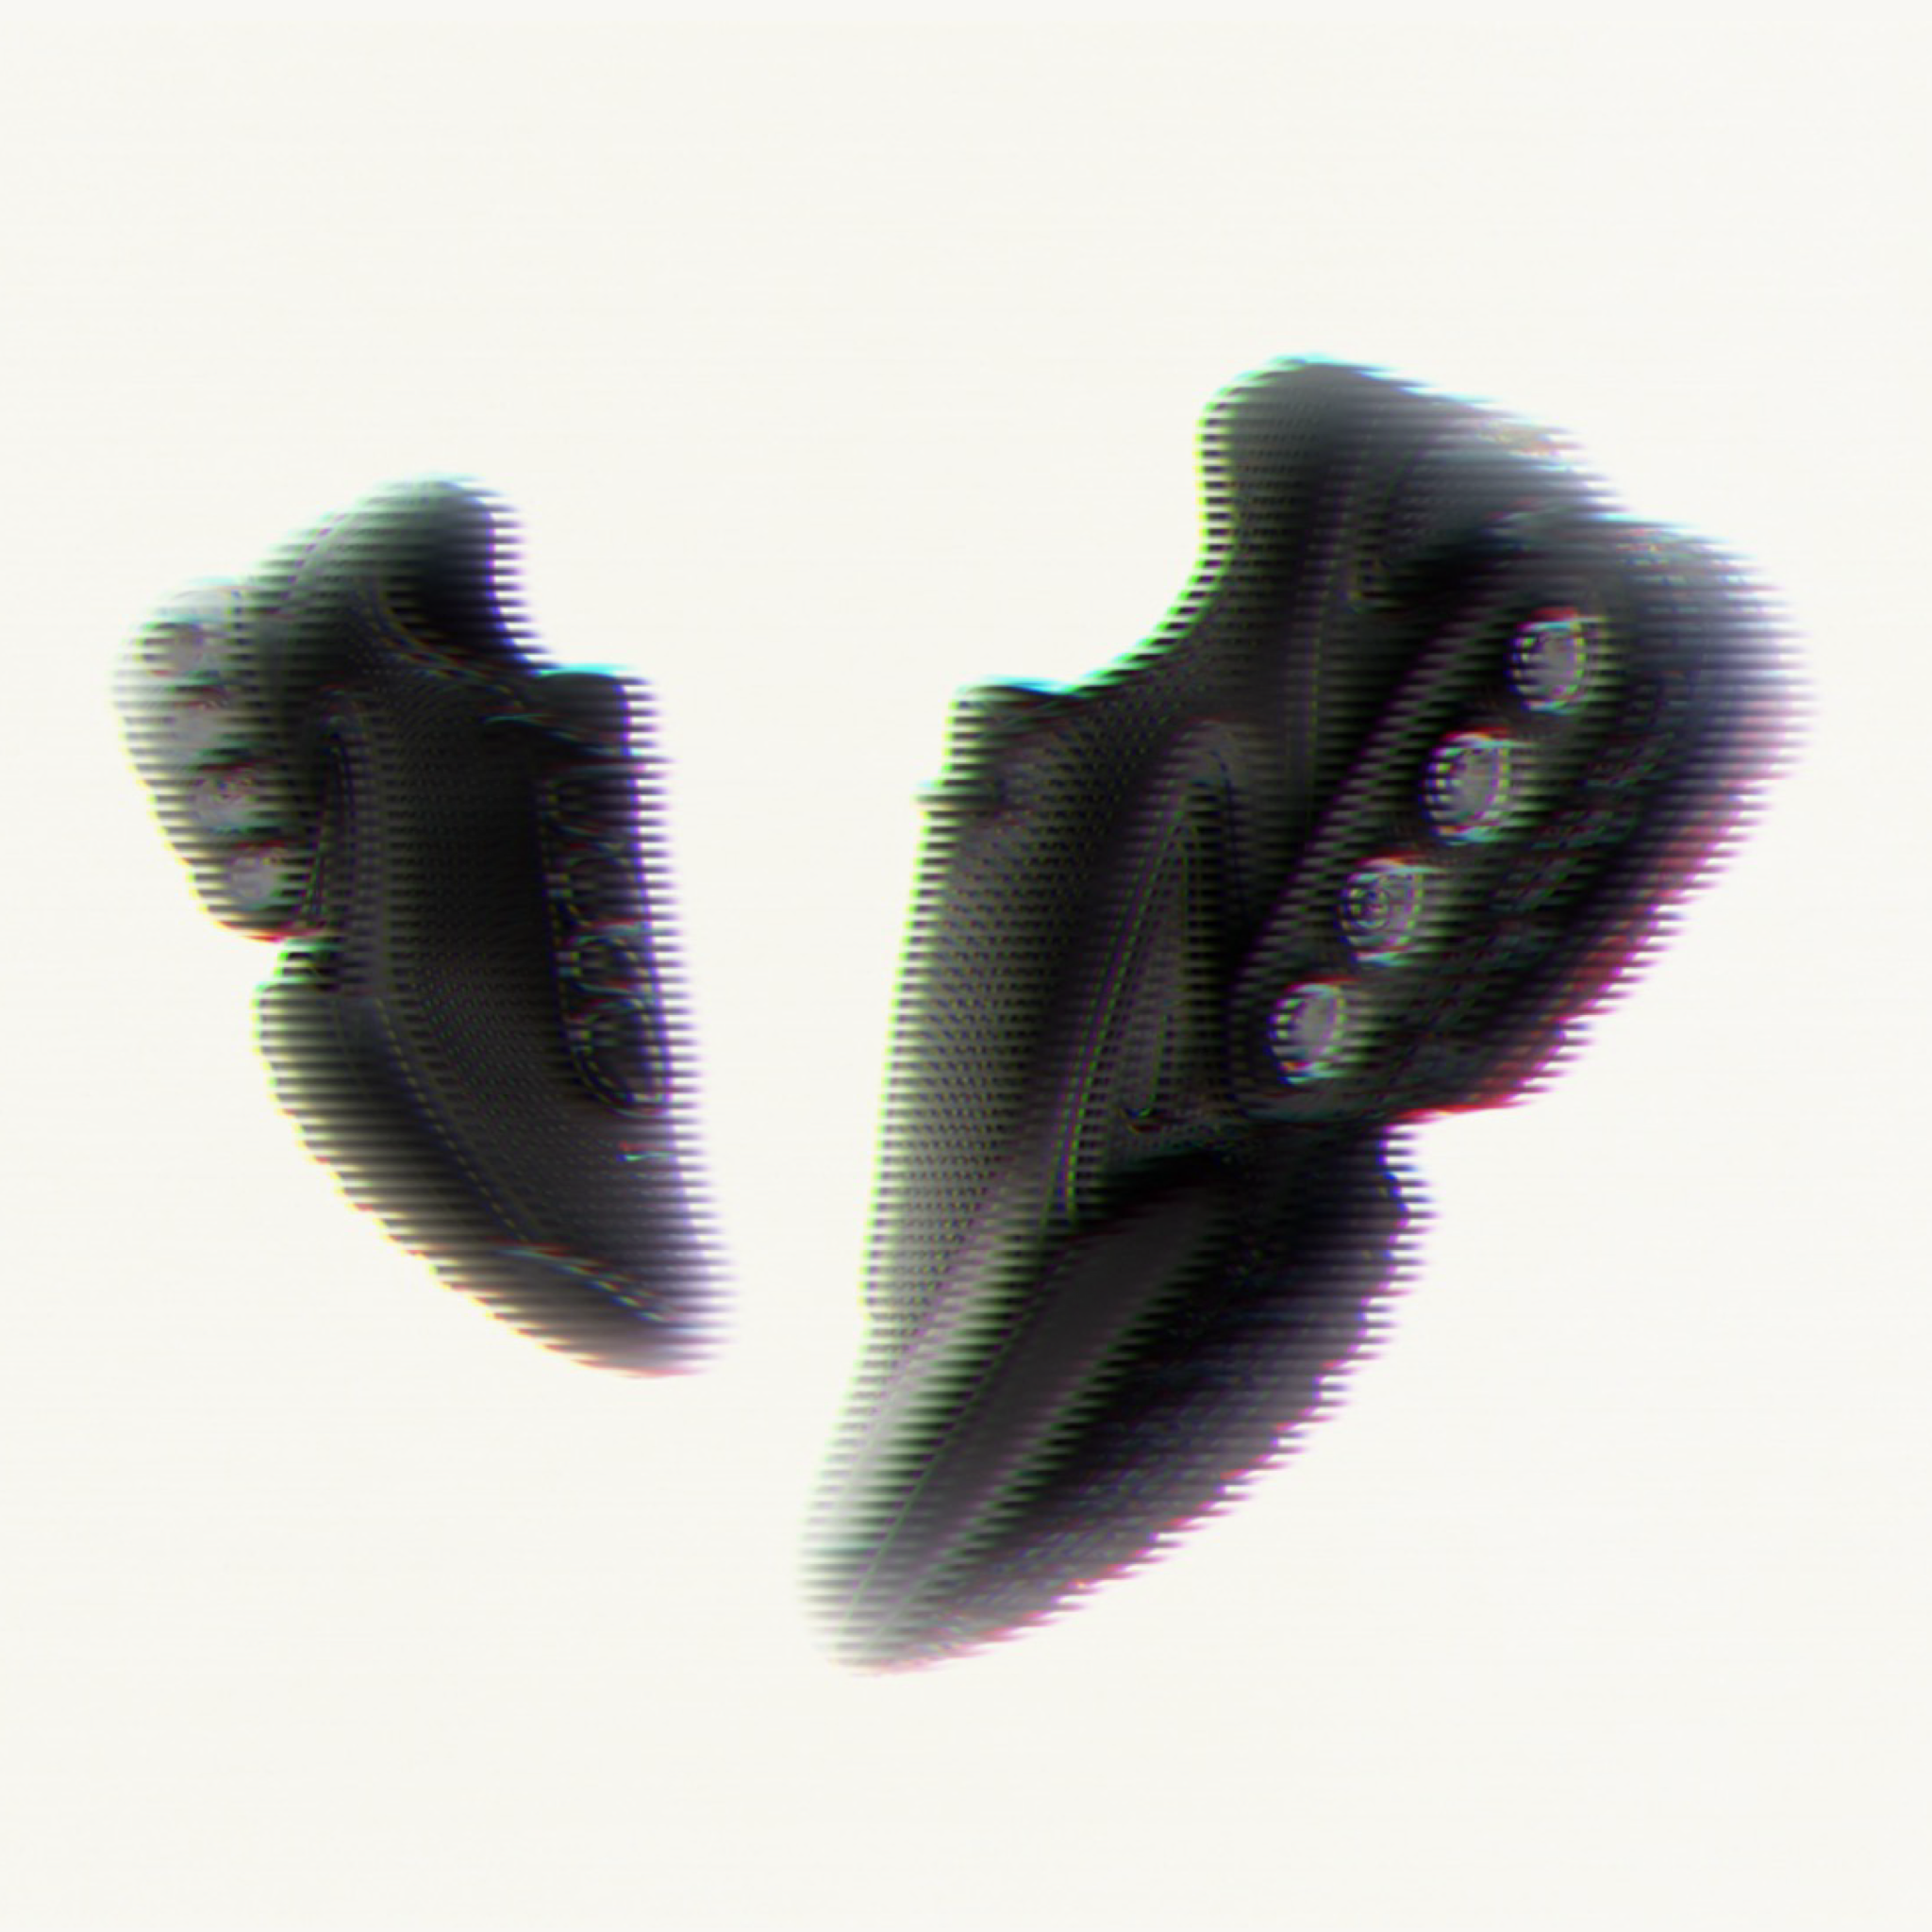 adidas x Kith Copa 18 Ultraboost sneakers